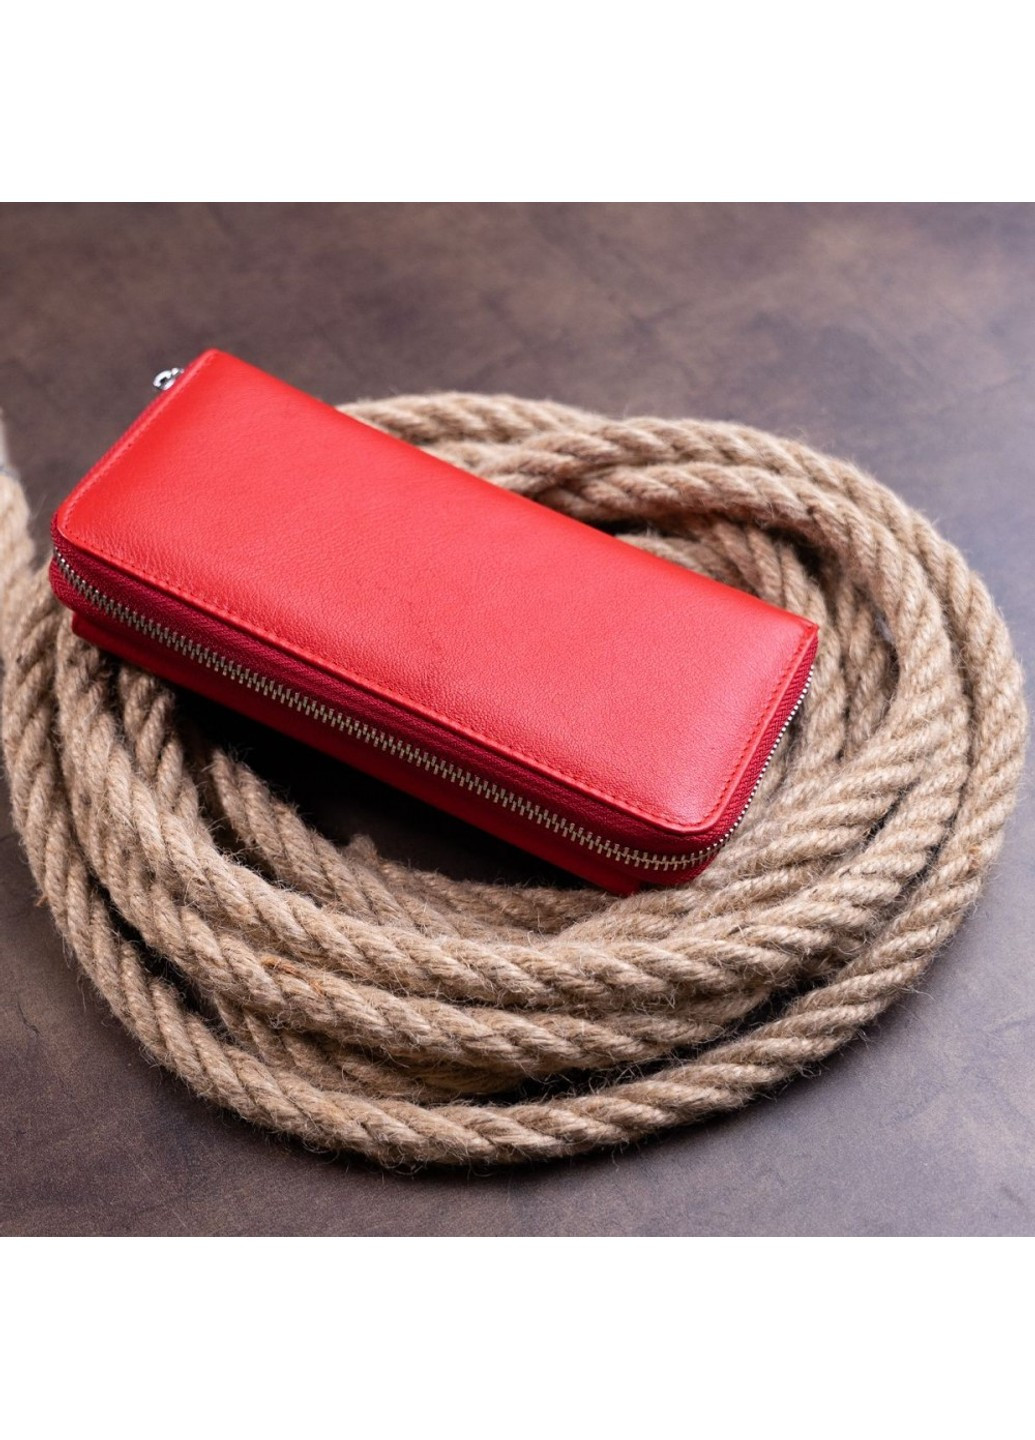 Кошелек из натуральной кожи ST Leather 19366 Красный ST Leather Accessories (262453788)